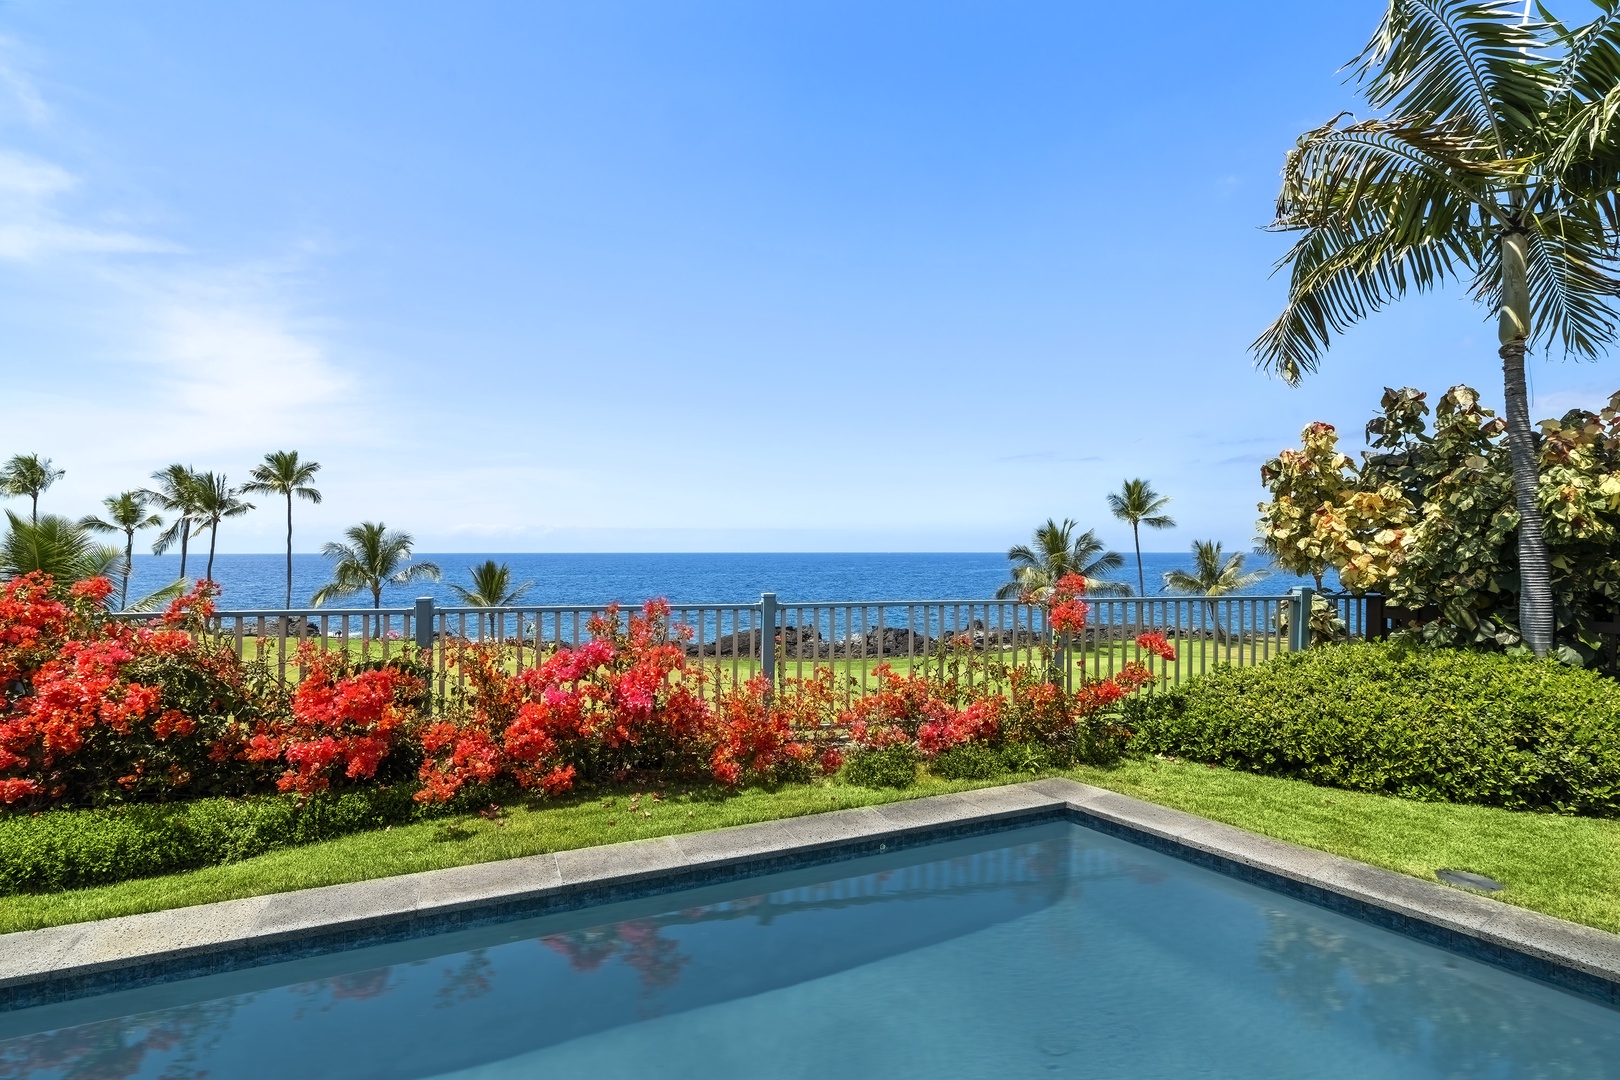 Kailua Kona Vacation Rentals, Blue Orca - Private pool